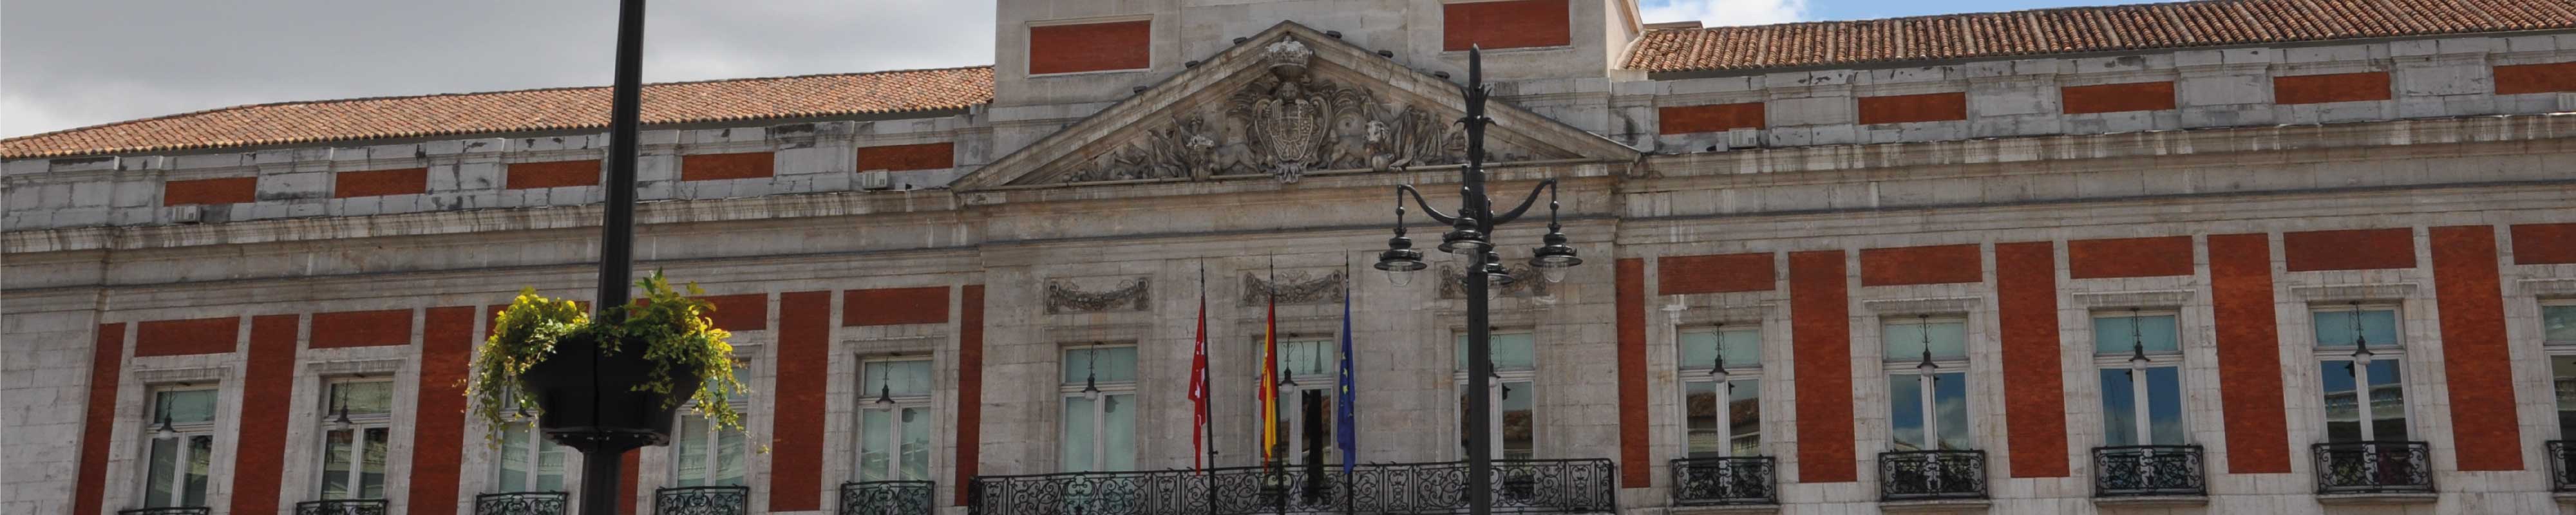 Gepäckaufbewahrung | Puerta del Sol in Madrid - Nannybag